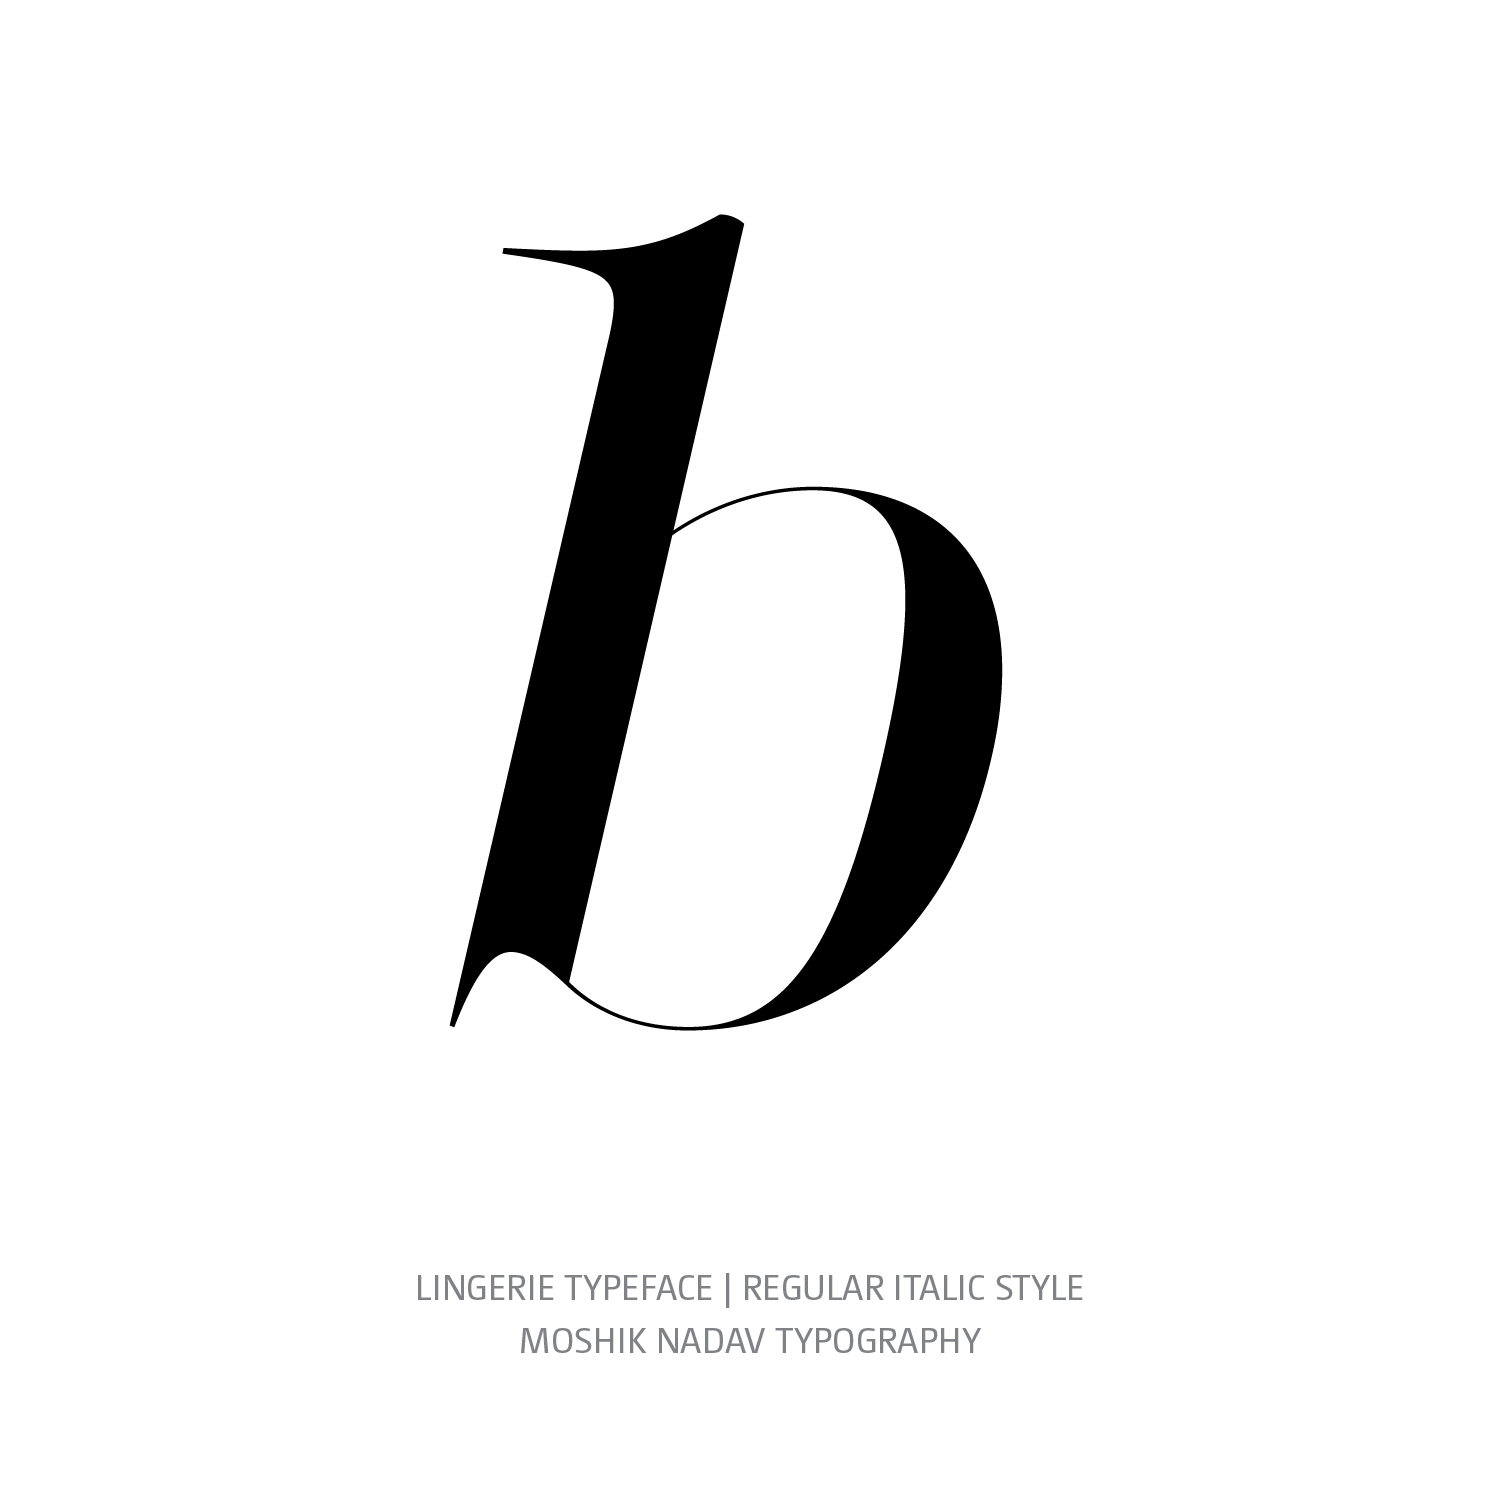 Lingerie Typeface Regular Italic b - Fashion fonts by Moshik Nadav Typography